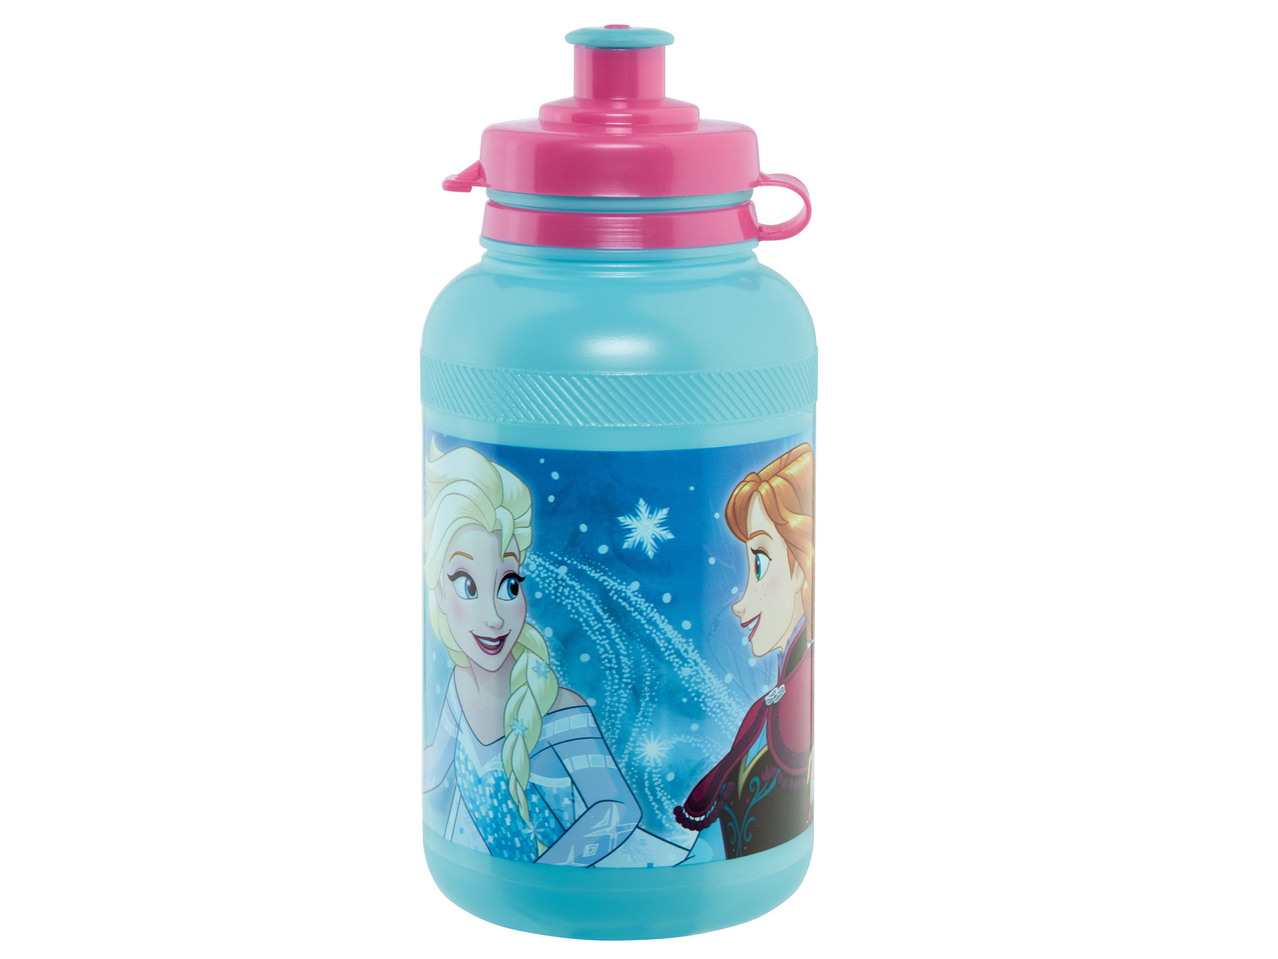 "Frozen, Minions, Cars" Kids' Water Bottle or Lunch Box